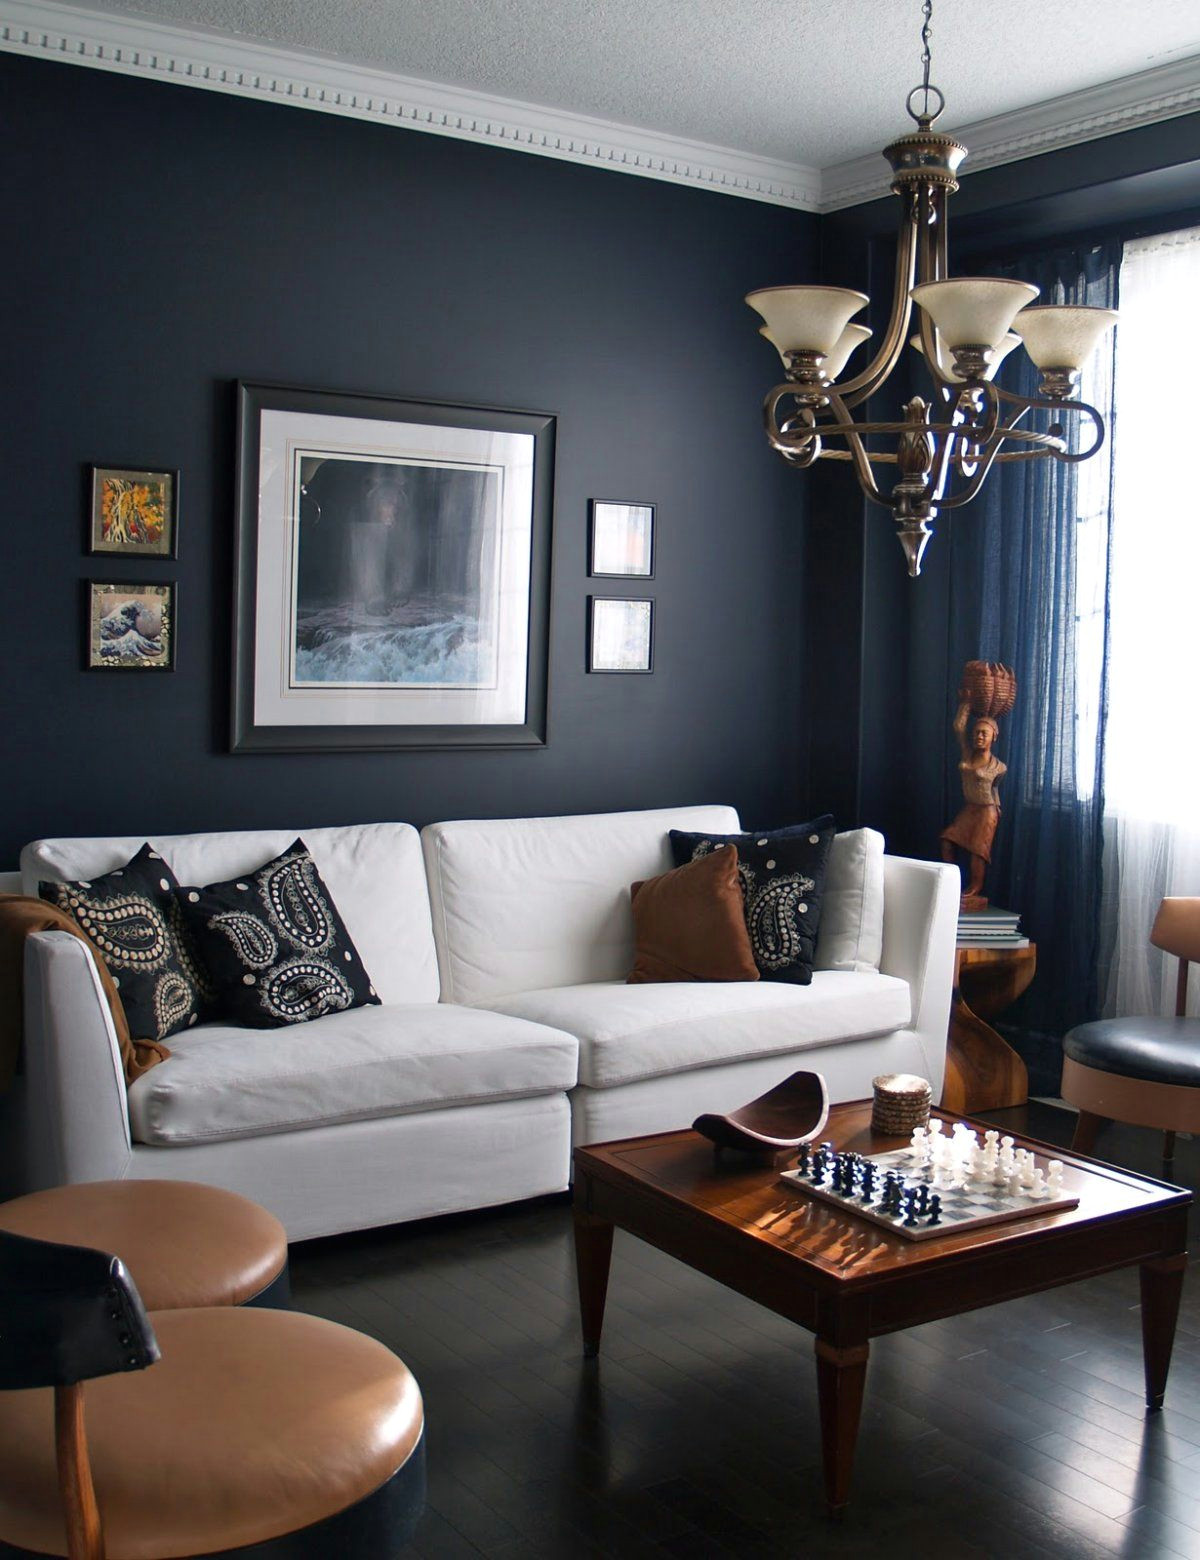 P S Drawing Room 15 Beautiful Dark Blue Wall Design Ideas Living Room Designs